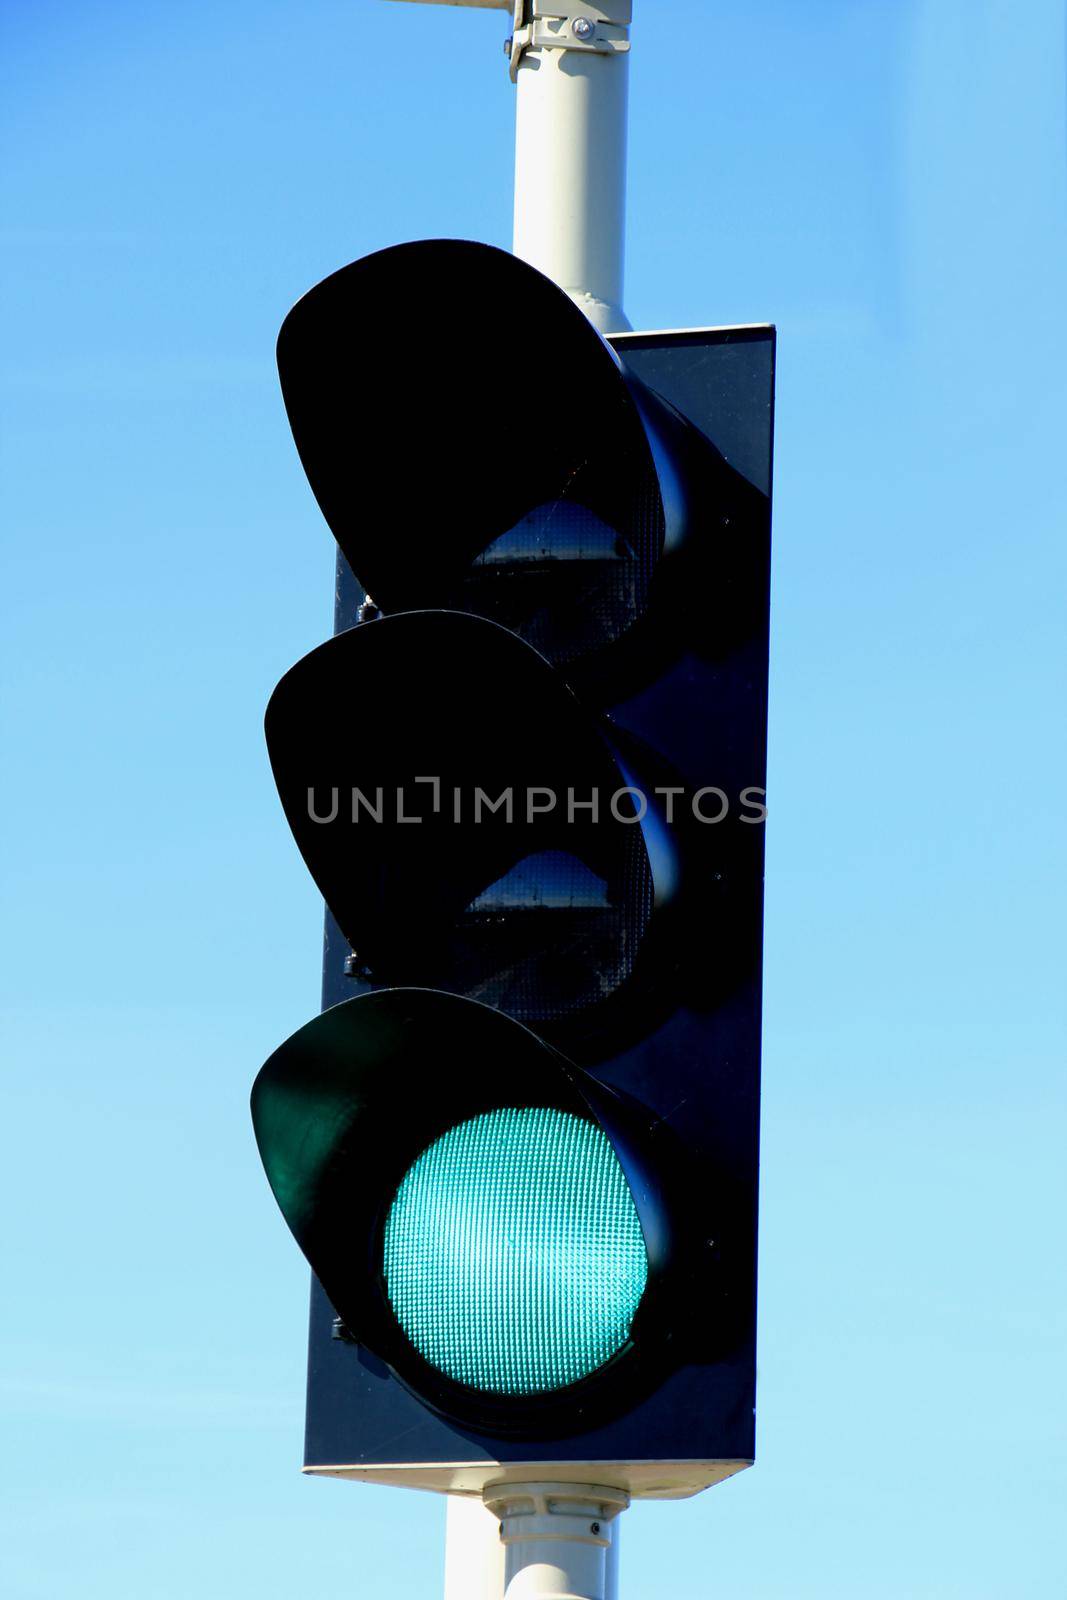 Traffic lights in a clear blue sky by studioportosabbia